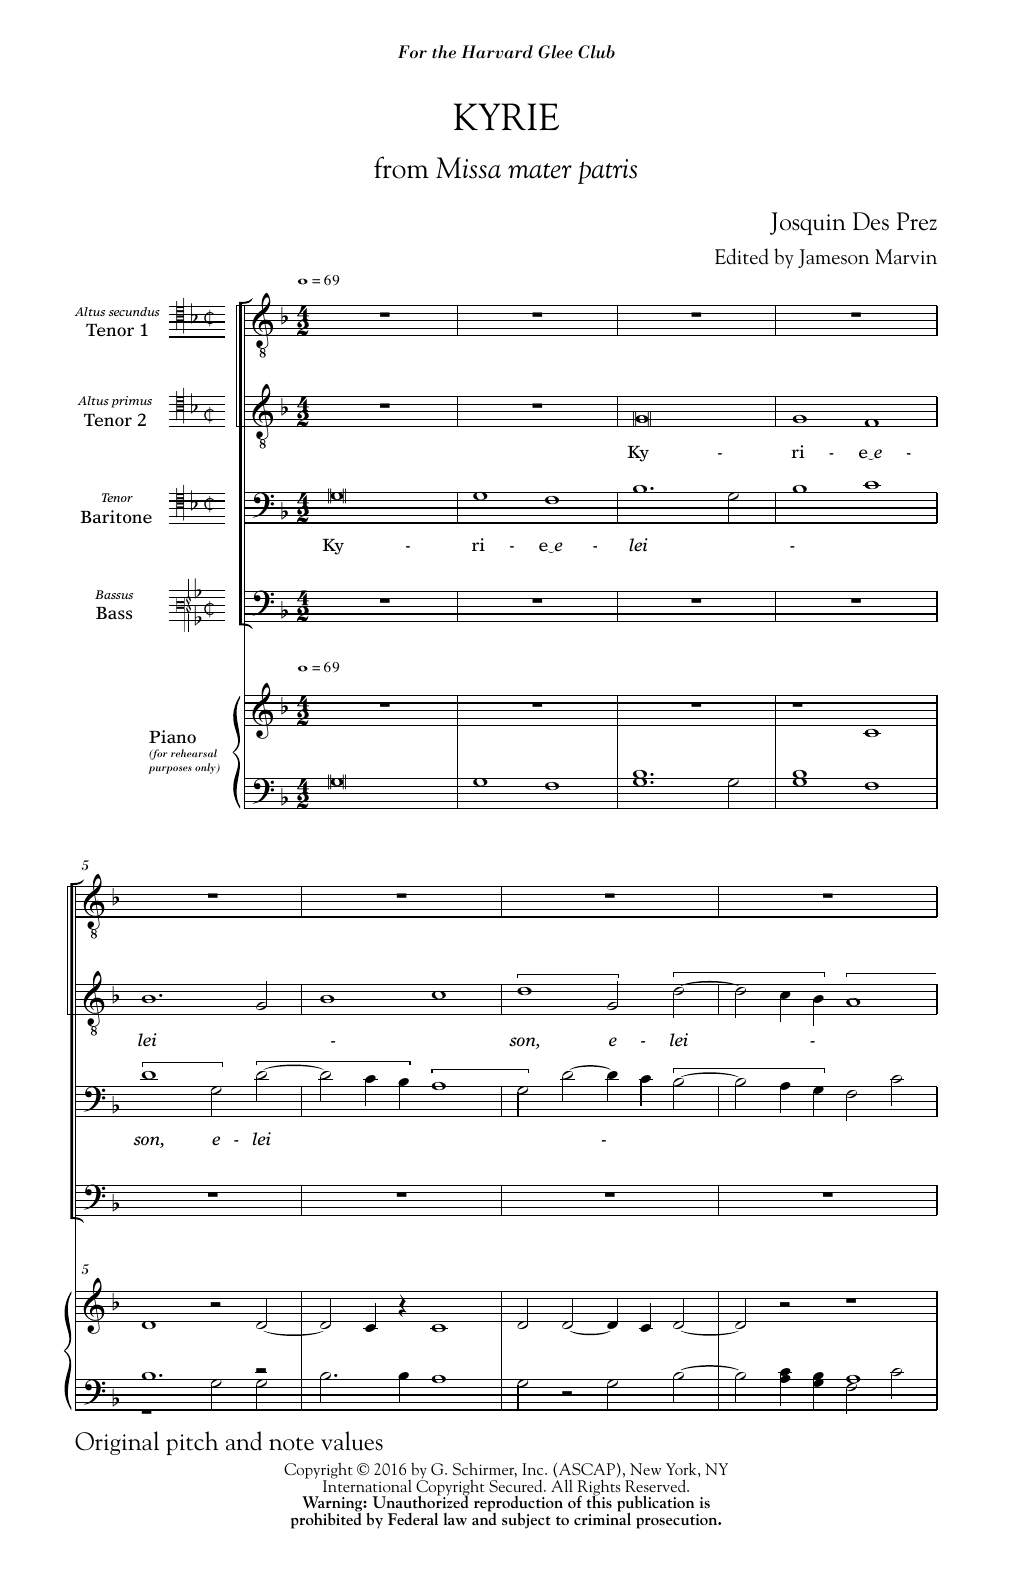 Jameson Marvin Kyrie sheet music notes and chords arranged for TTBB Choir